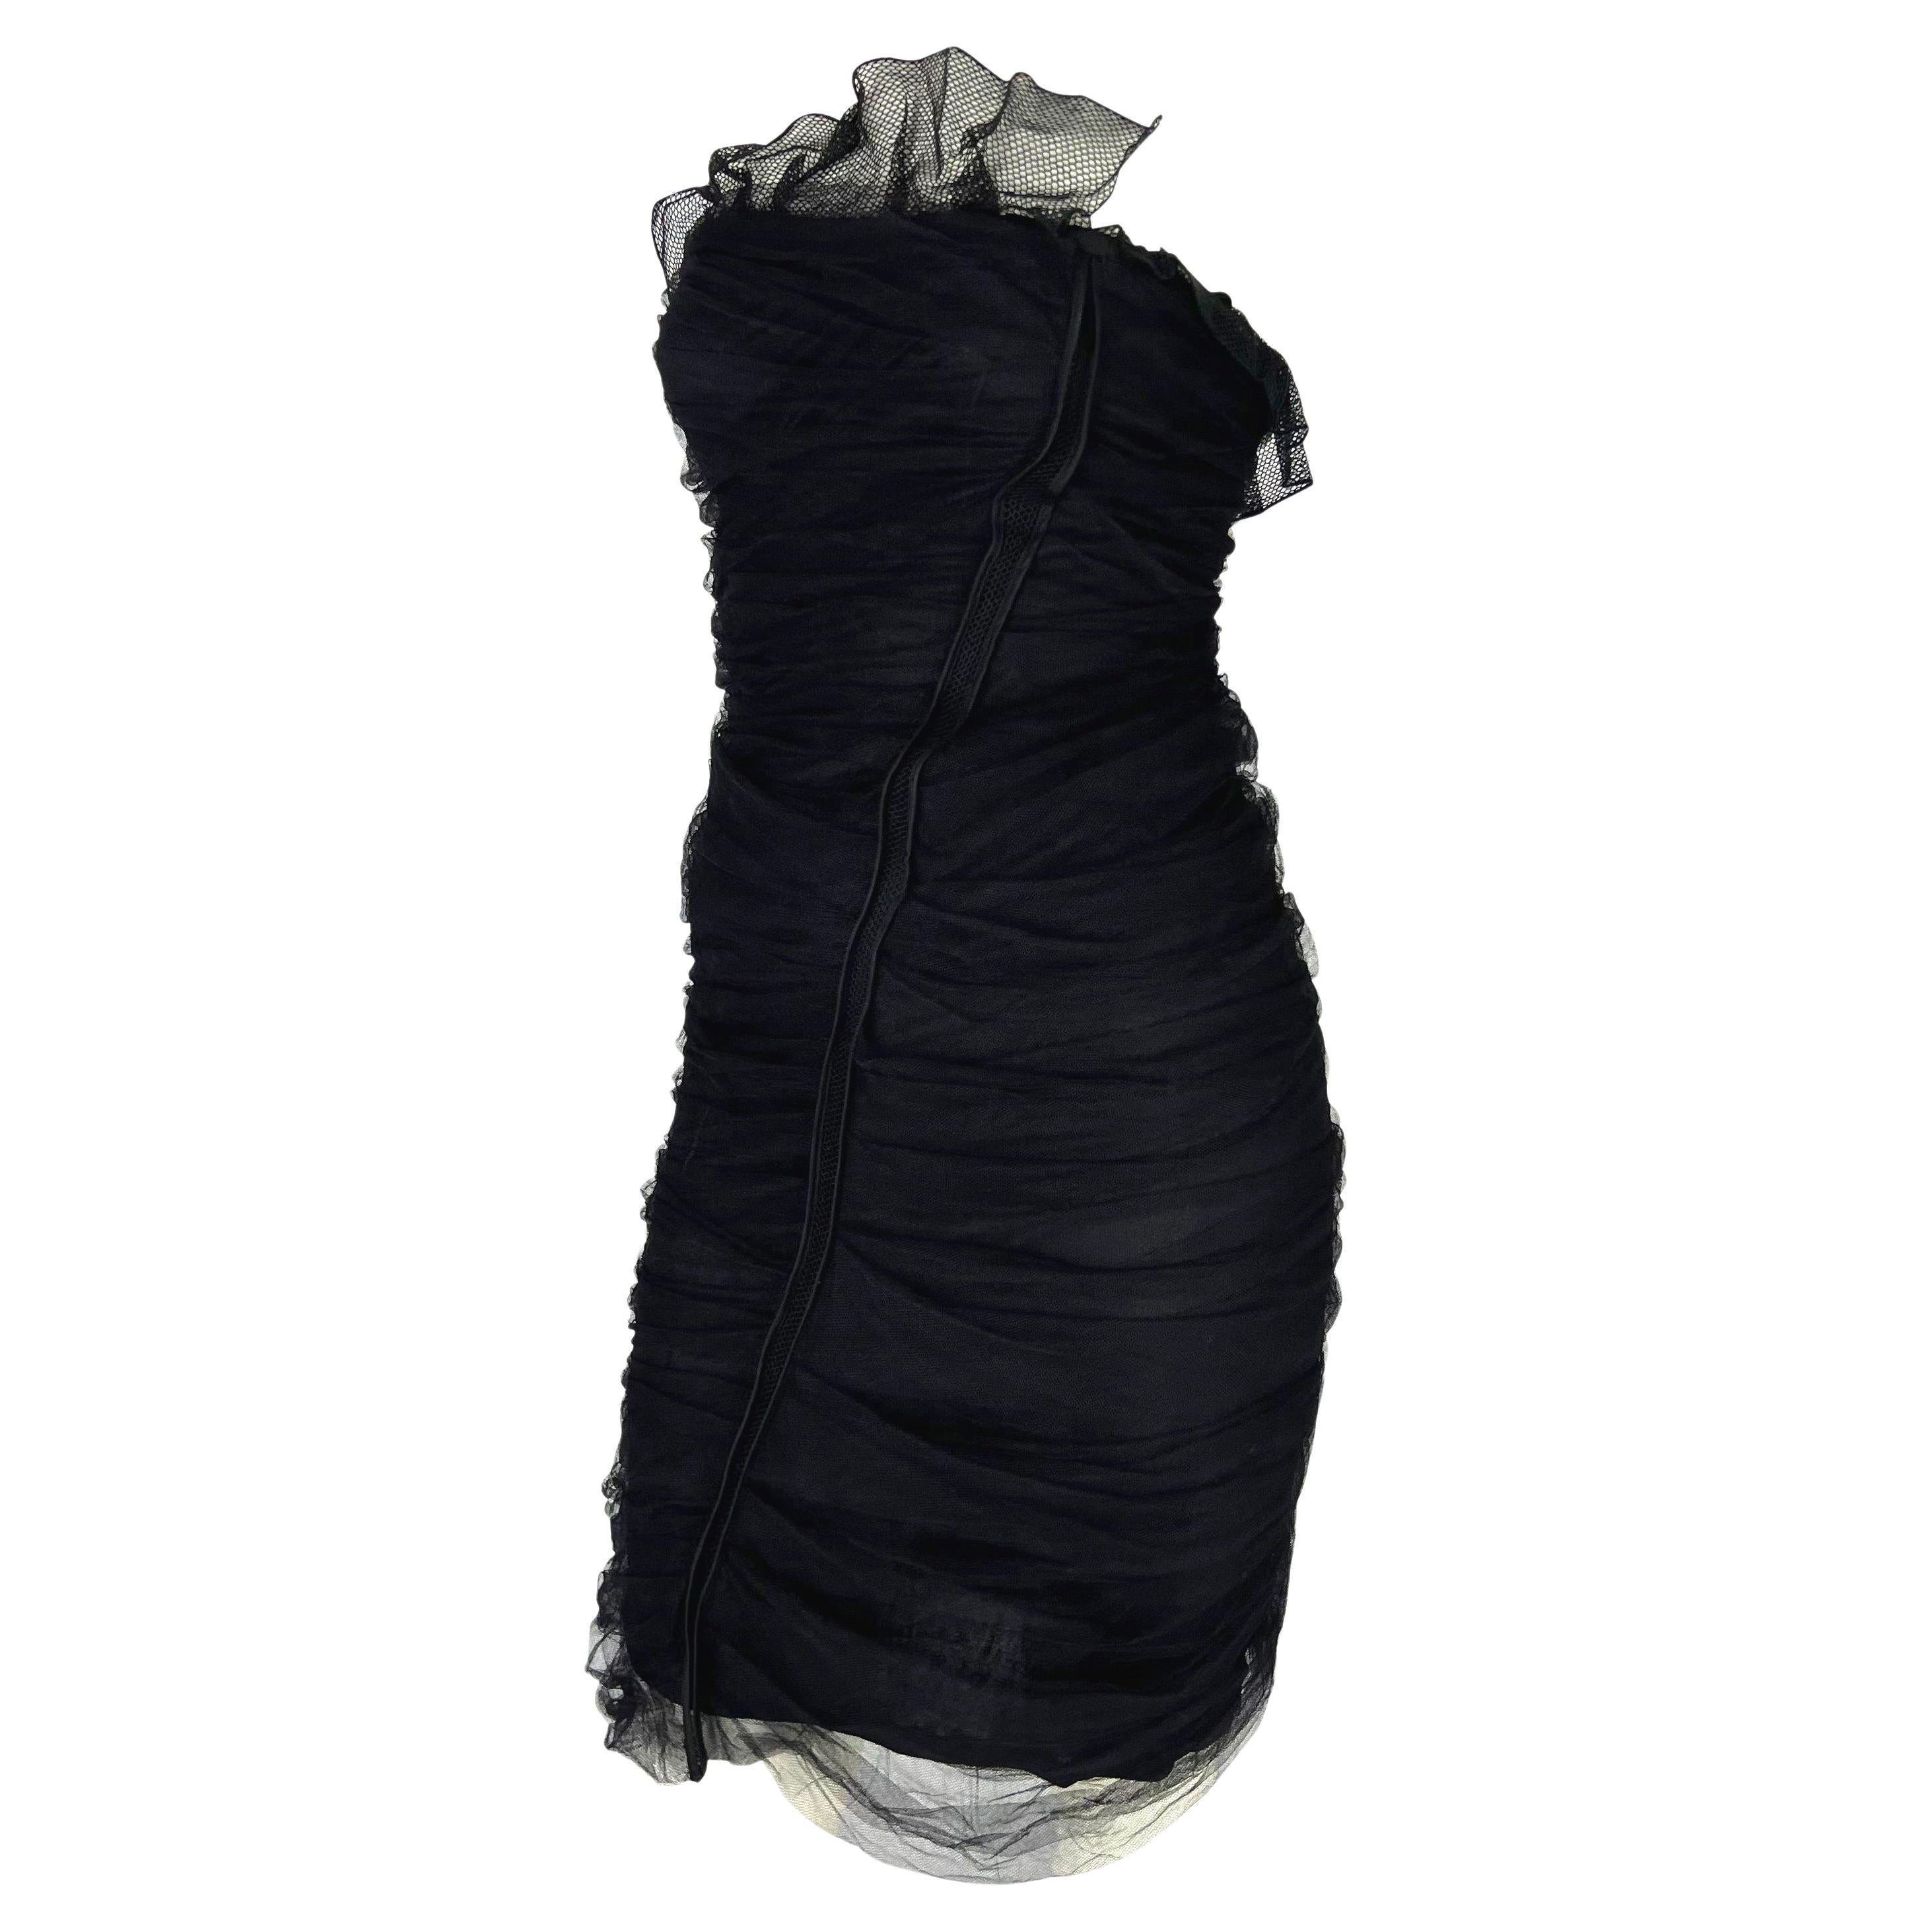 black tulle overlay dress